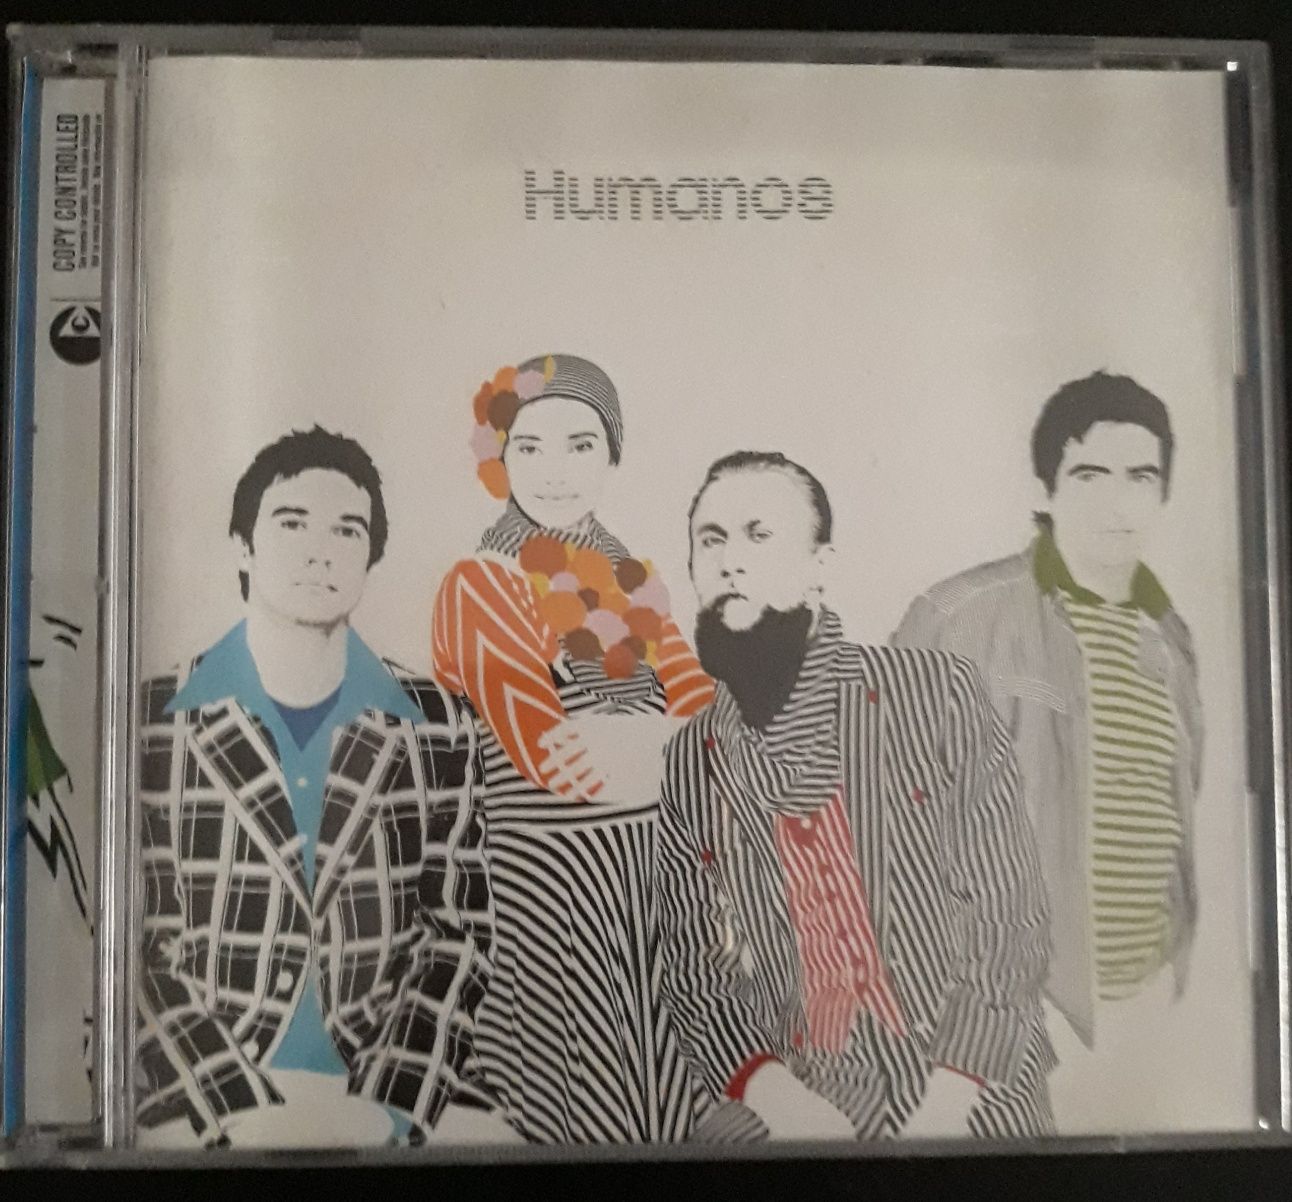 CD Humanos - António Variações Humanos